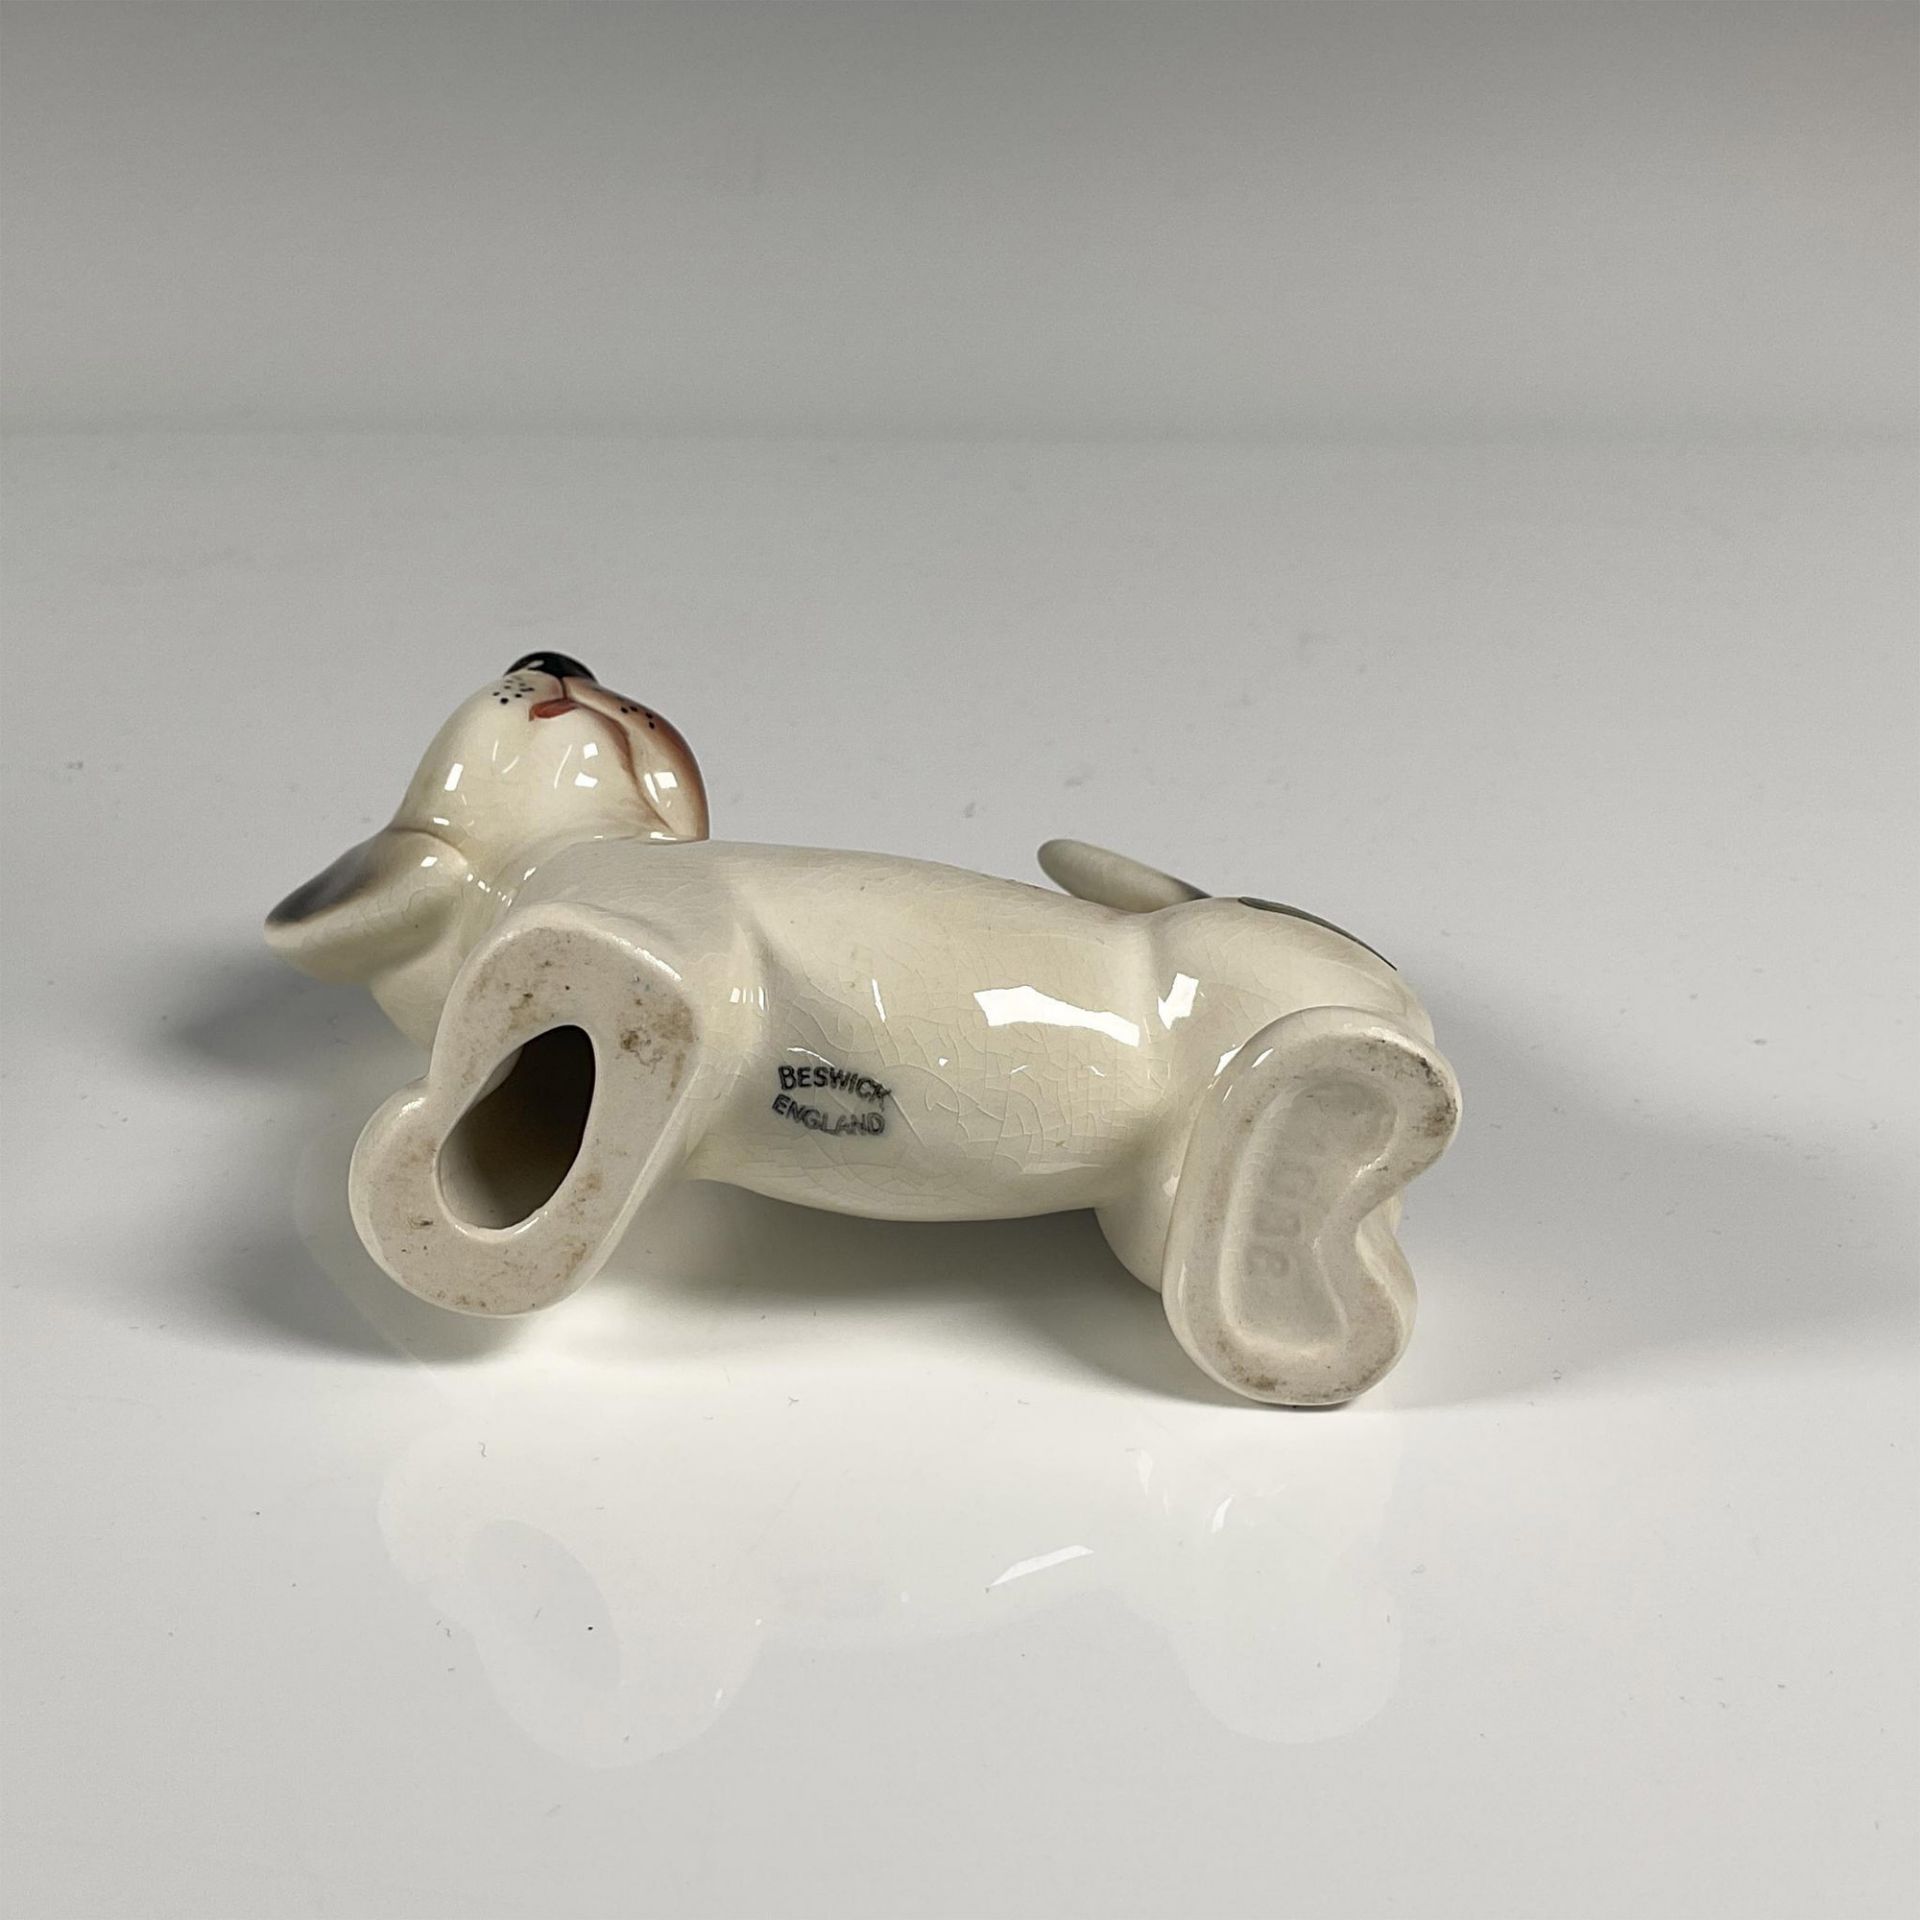 Beswick Ceramic Figurine, Comical Dachshund - Image 3 of 3